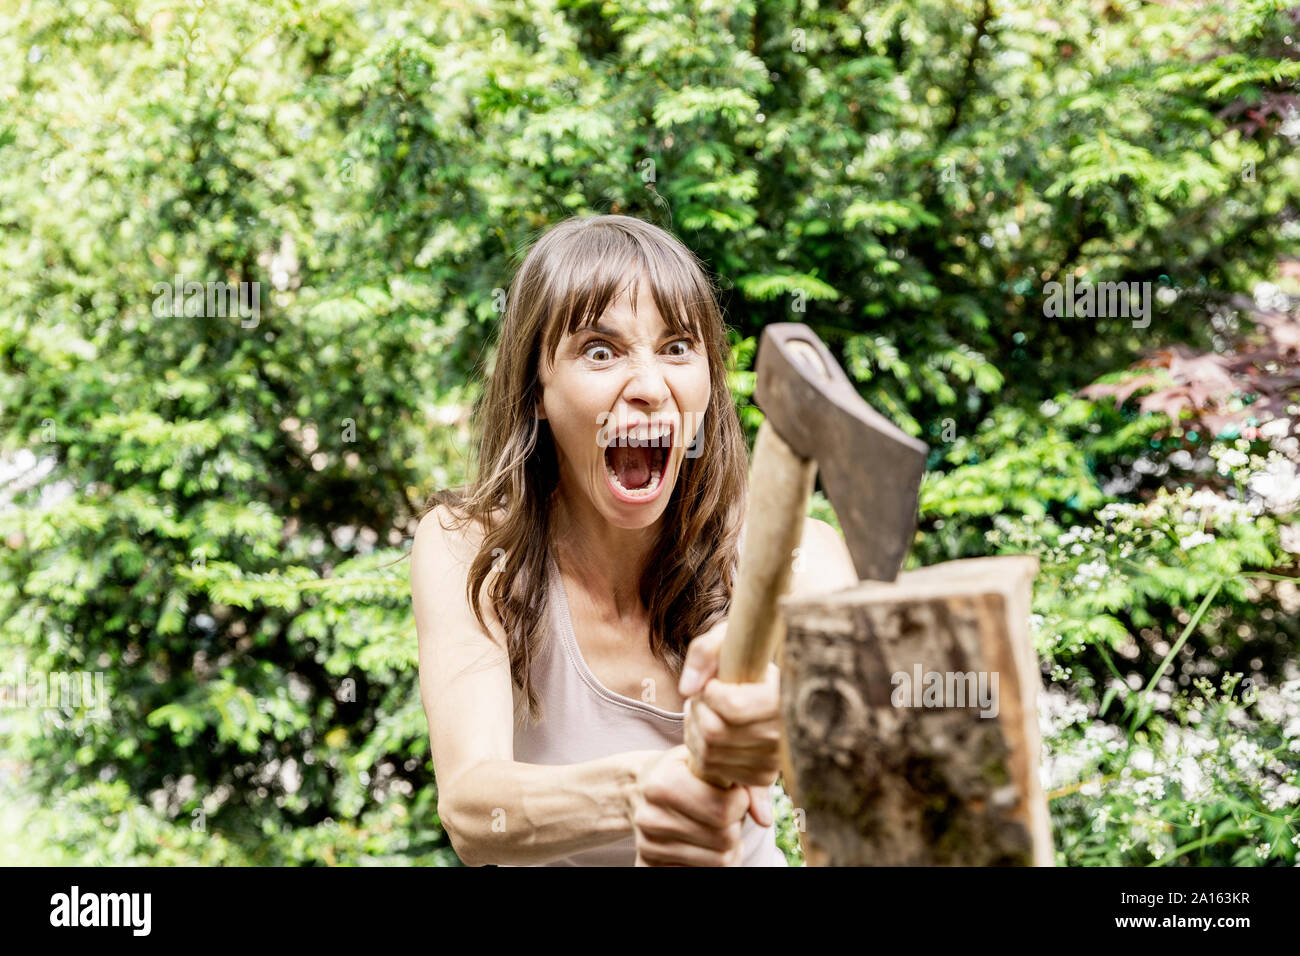 Screaming woman chopping wood Stock Photo